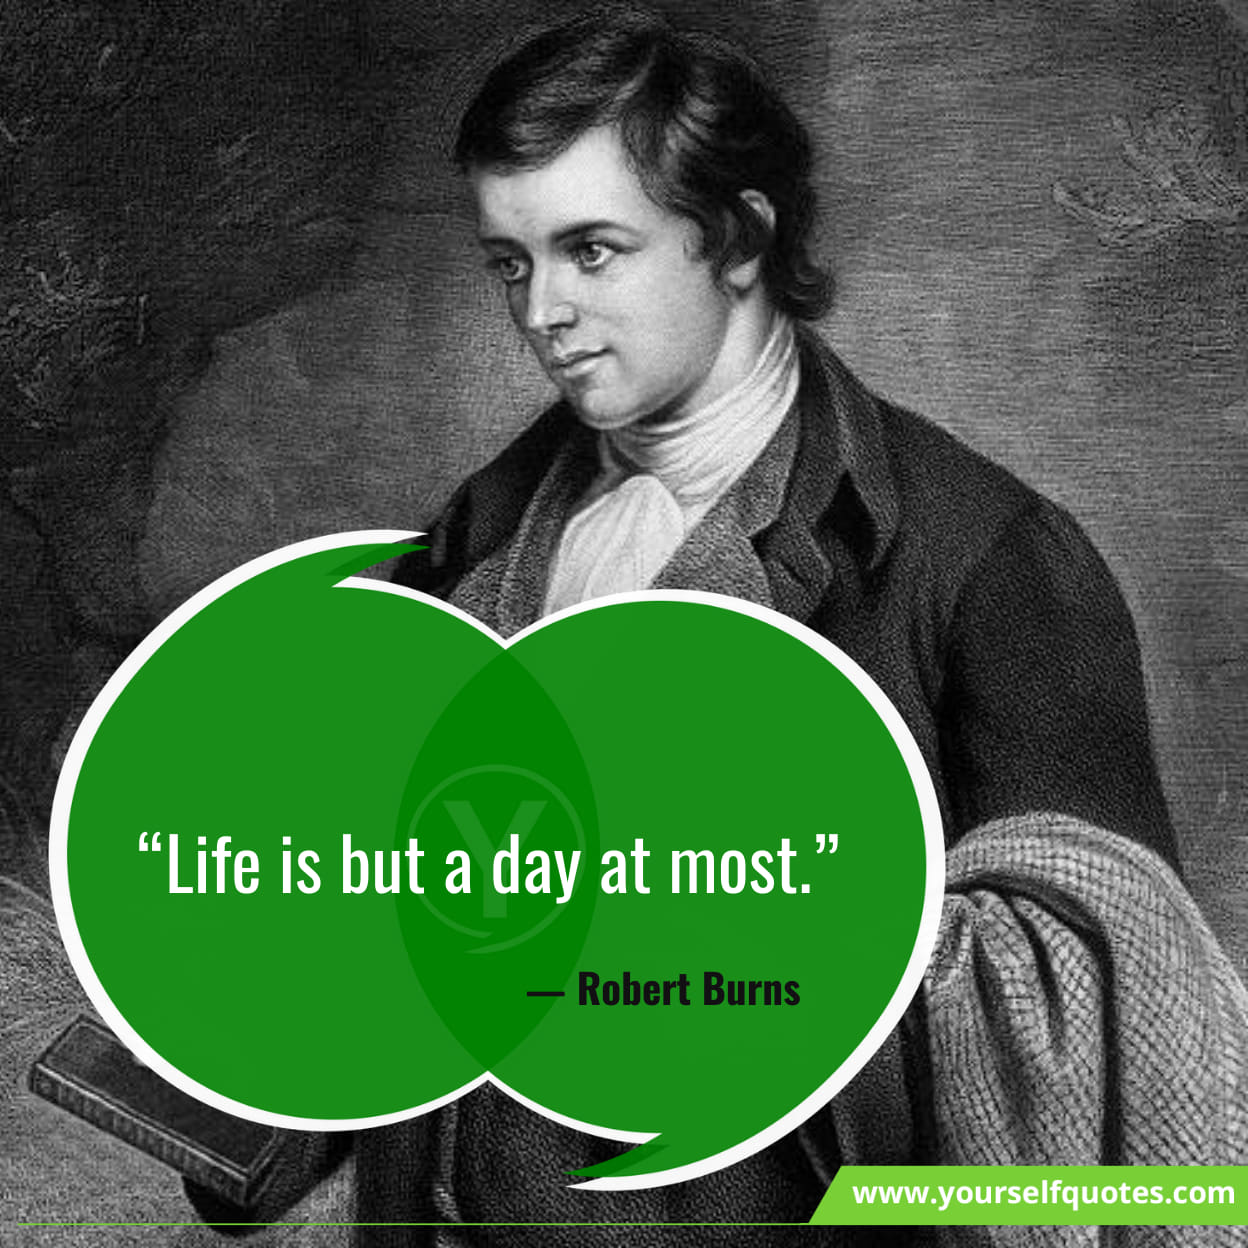 Robert Burns Quotes About Life